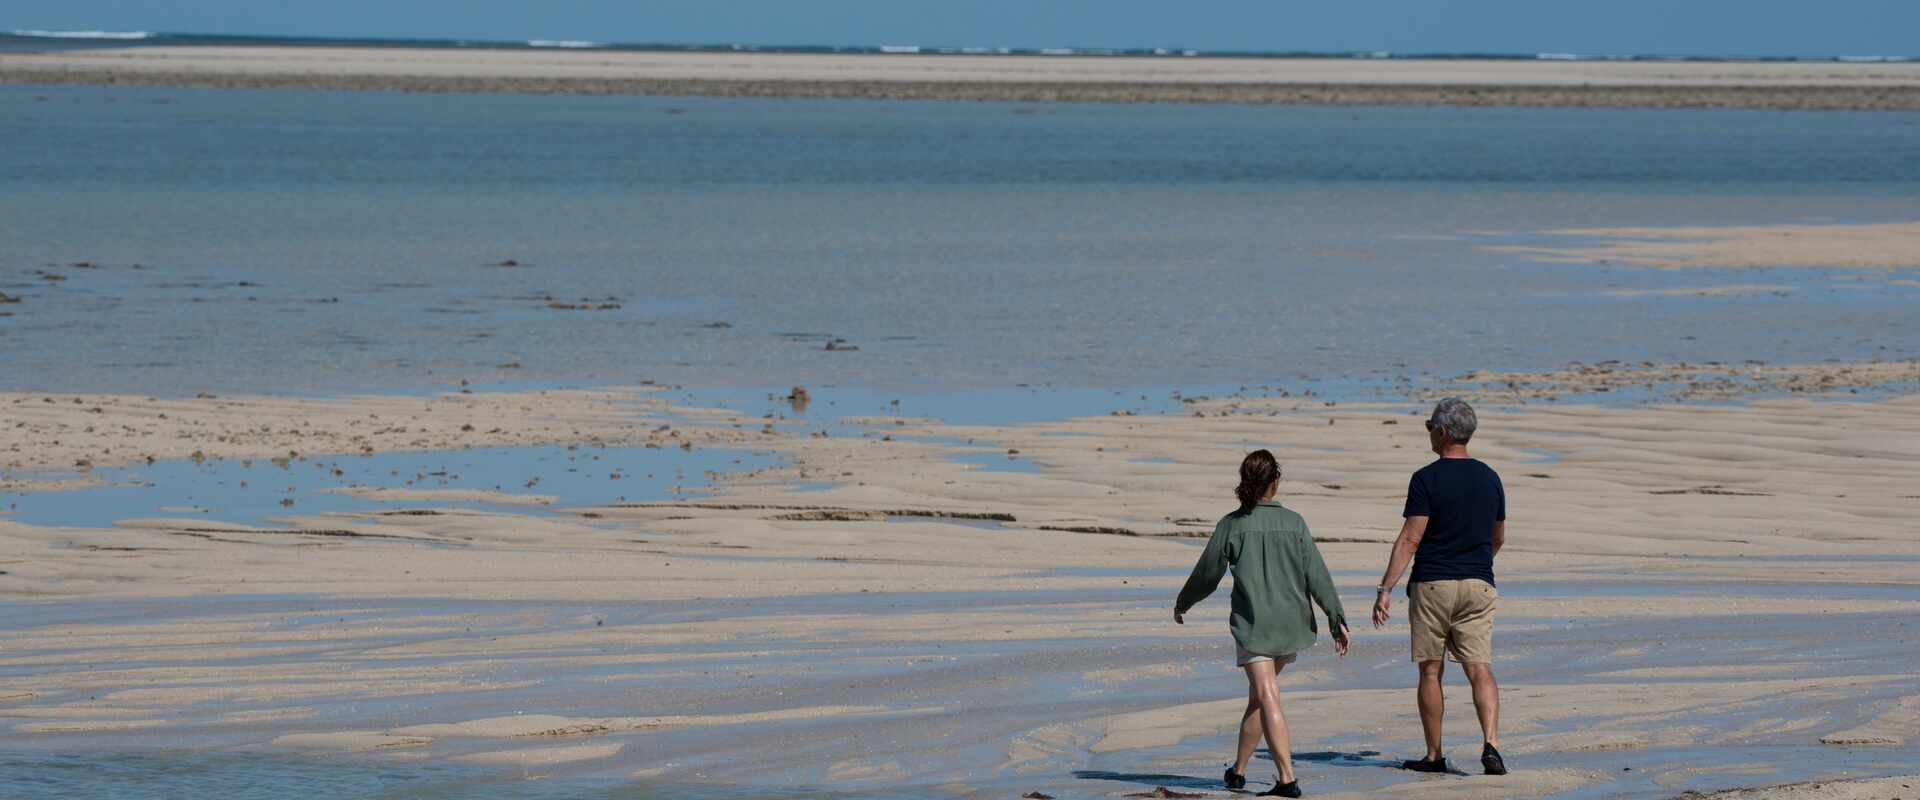 View of pax walking on shore of Adele Island, Kimberley